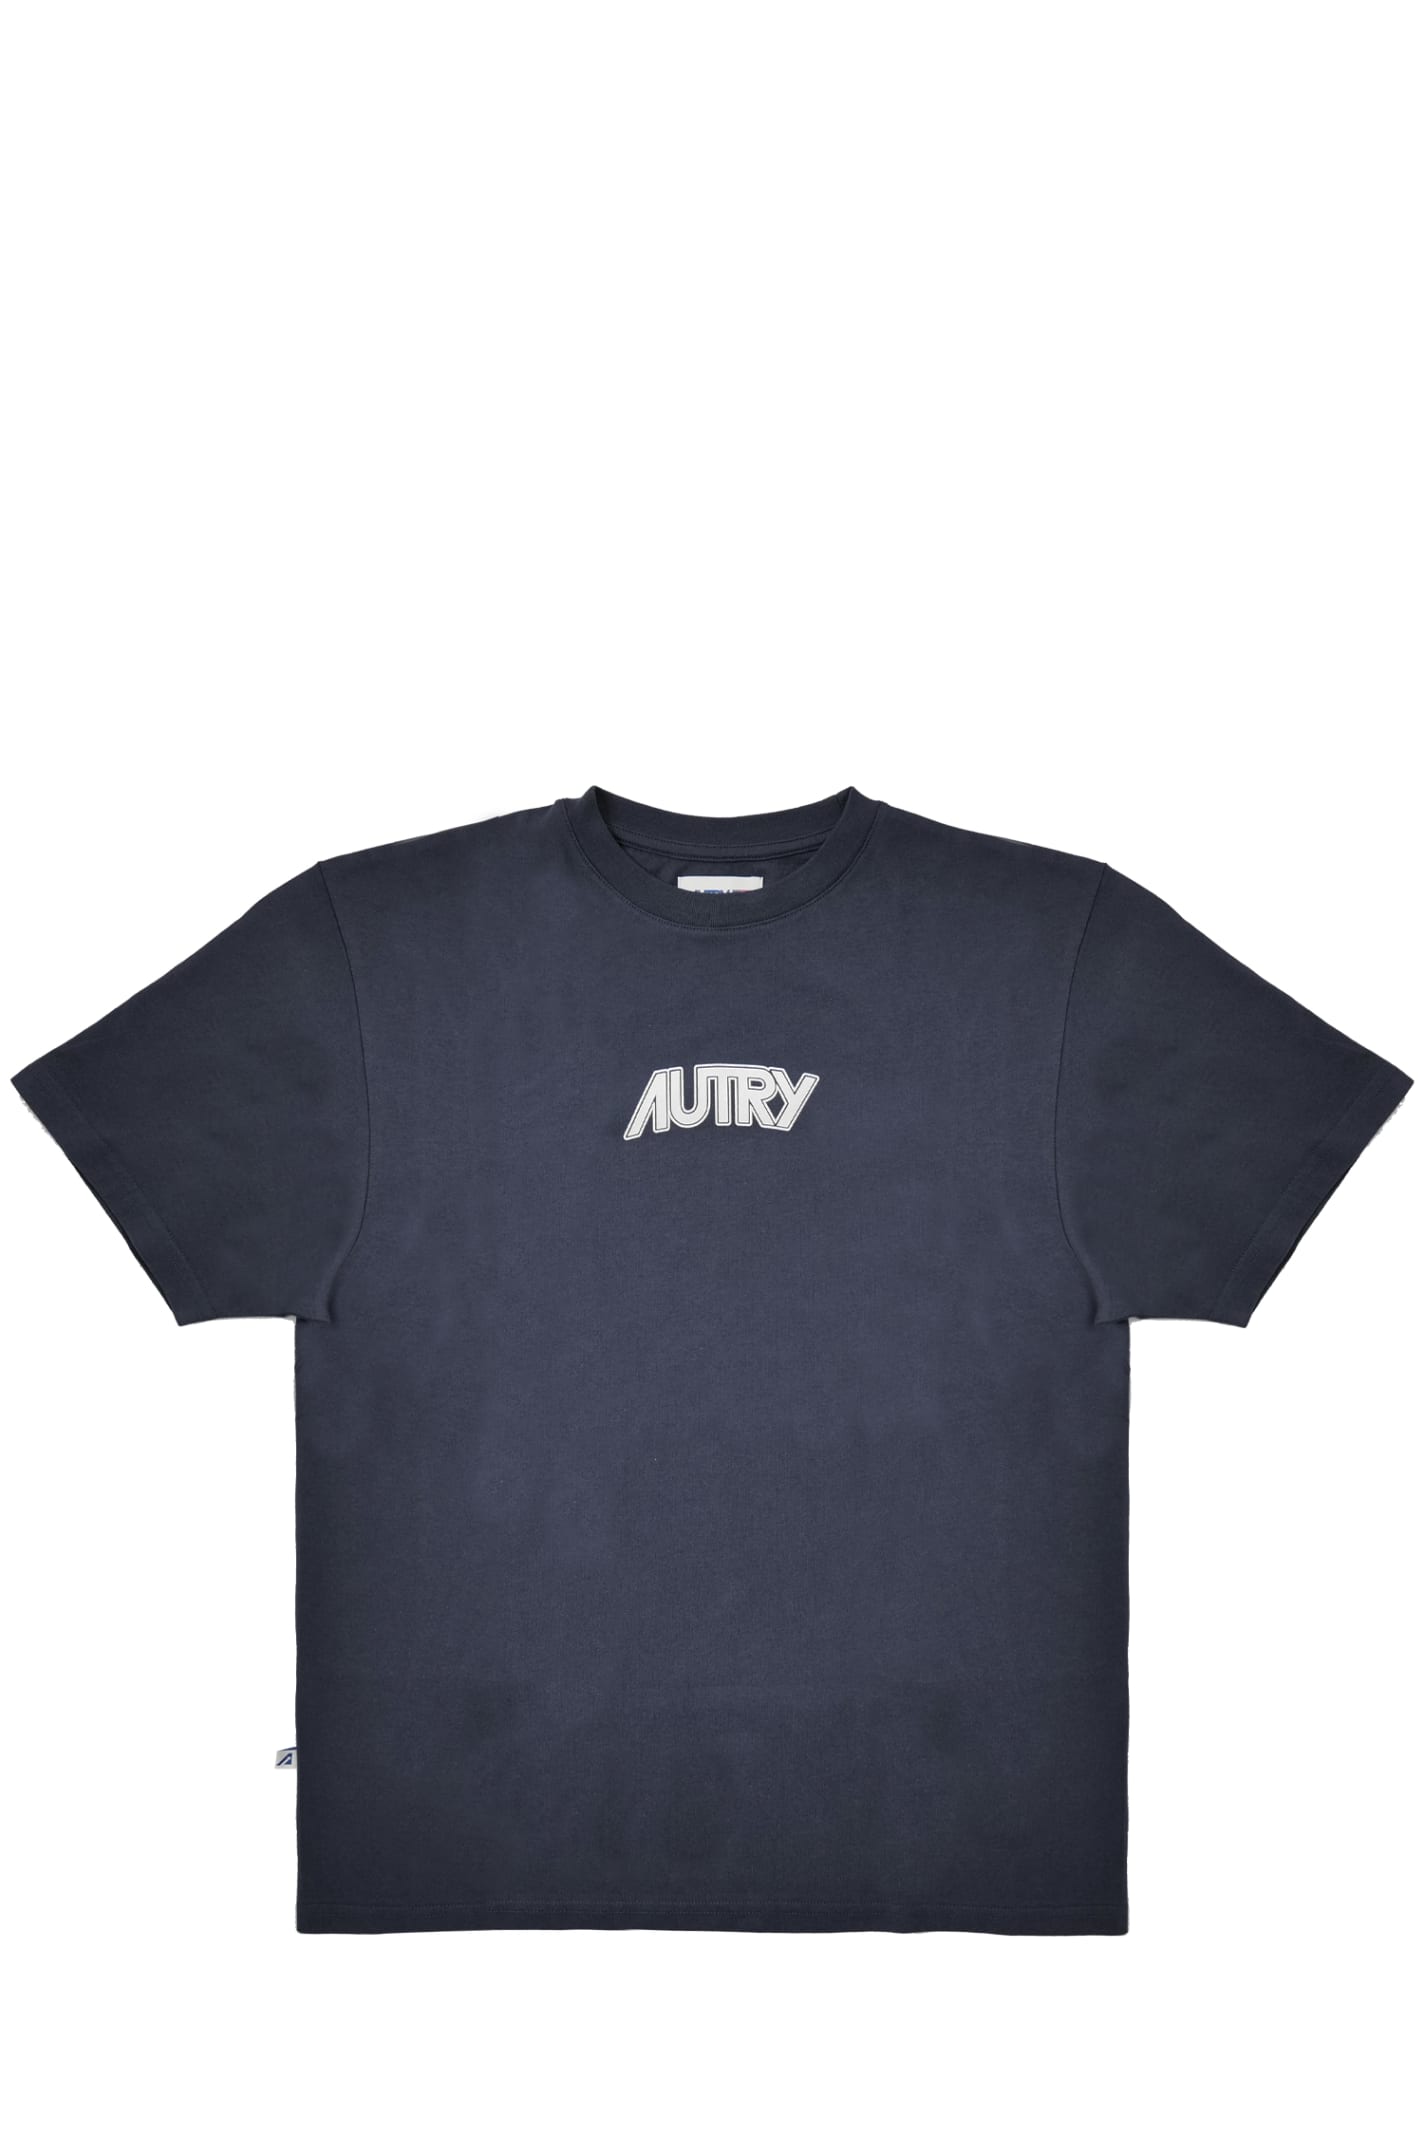 Autry T-shirt In Navy